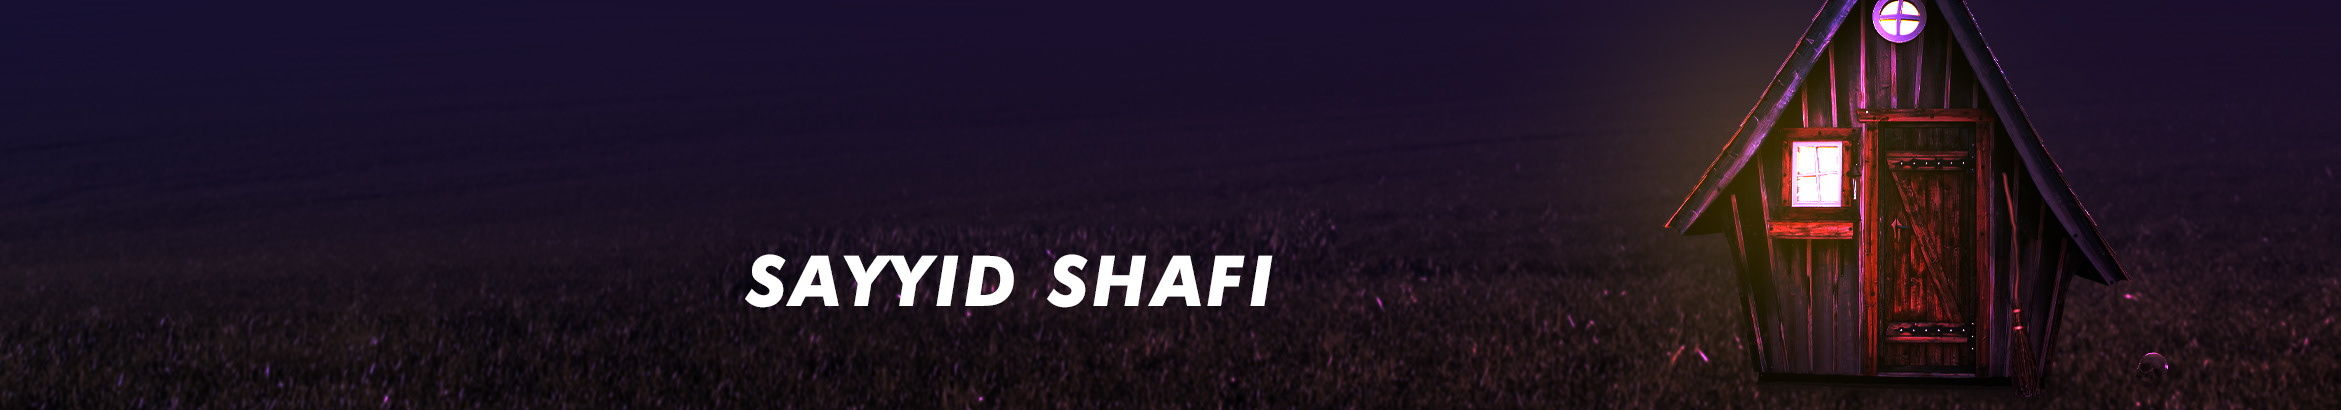 Sayyid Shafi's profile banner